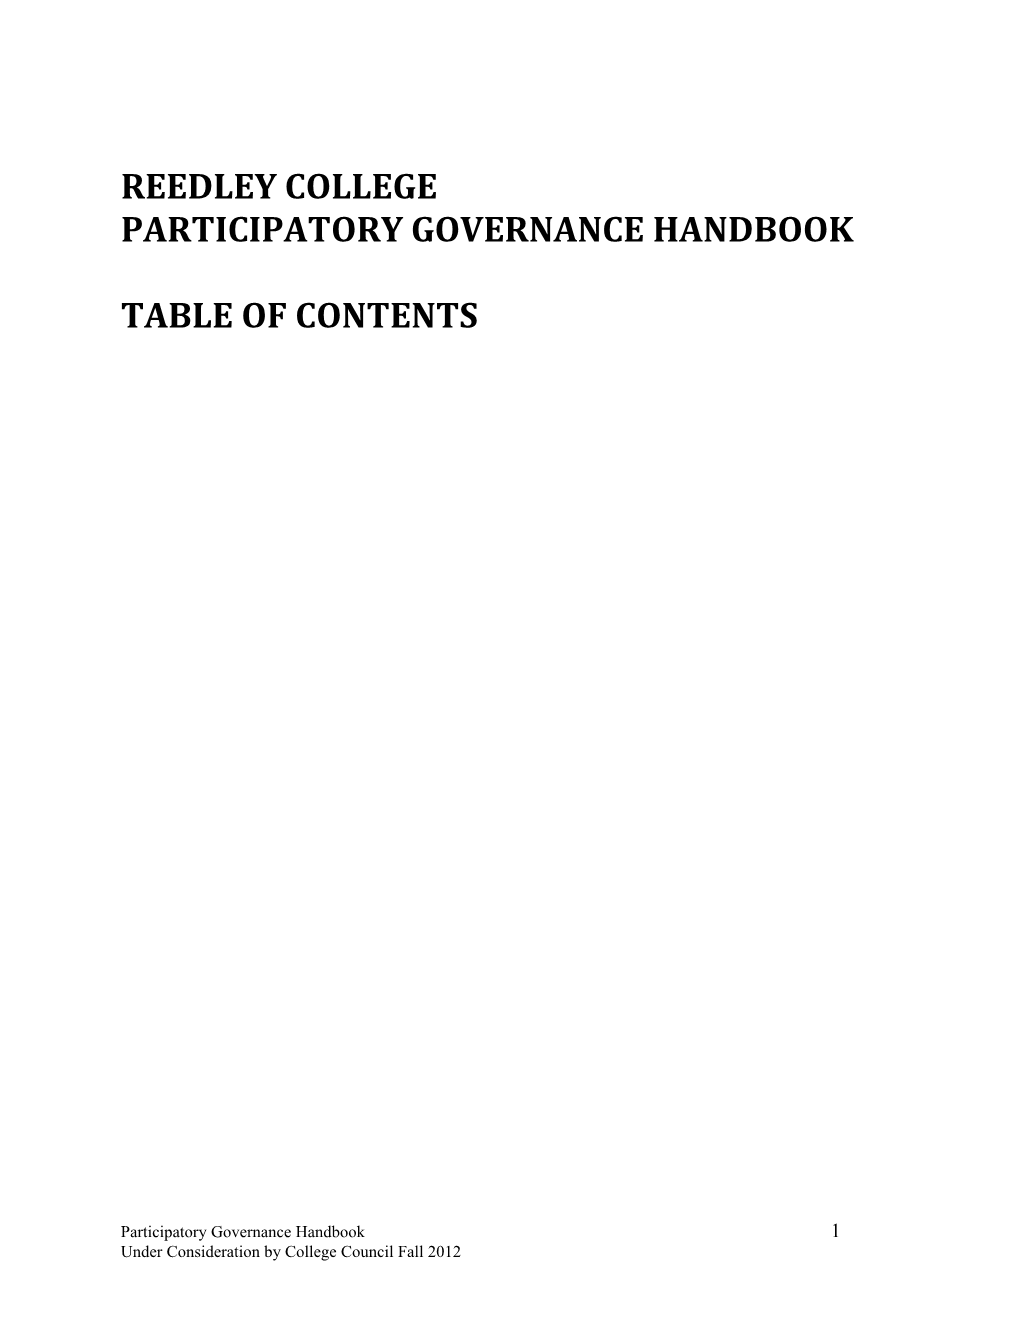 Participatory Governance Handbook